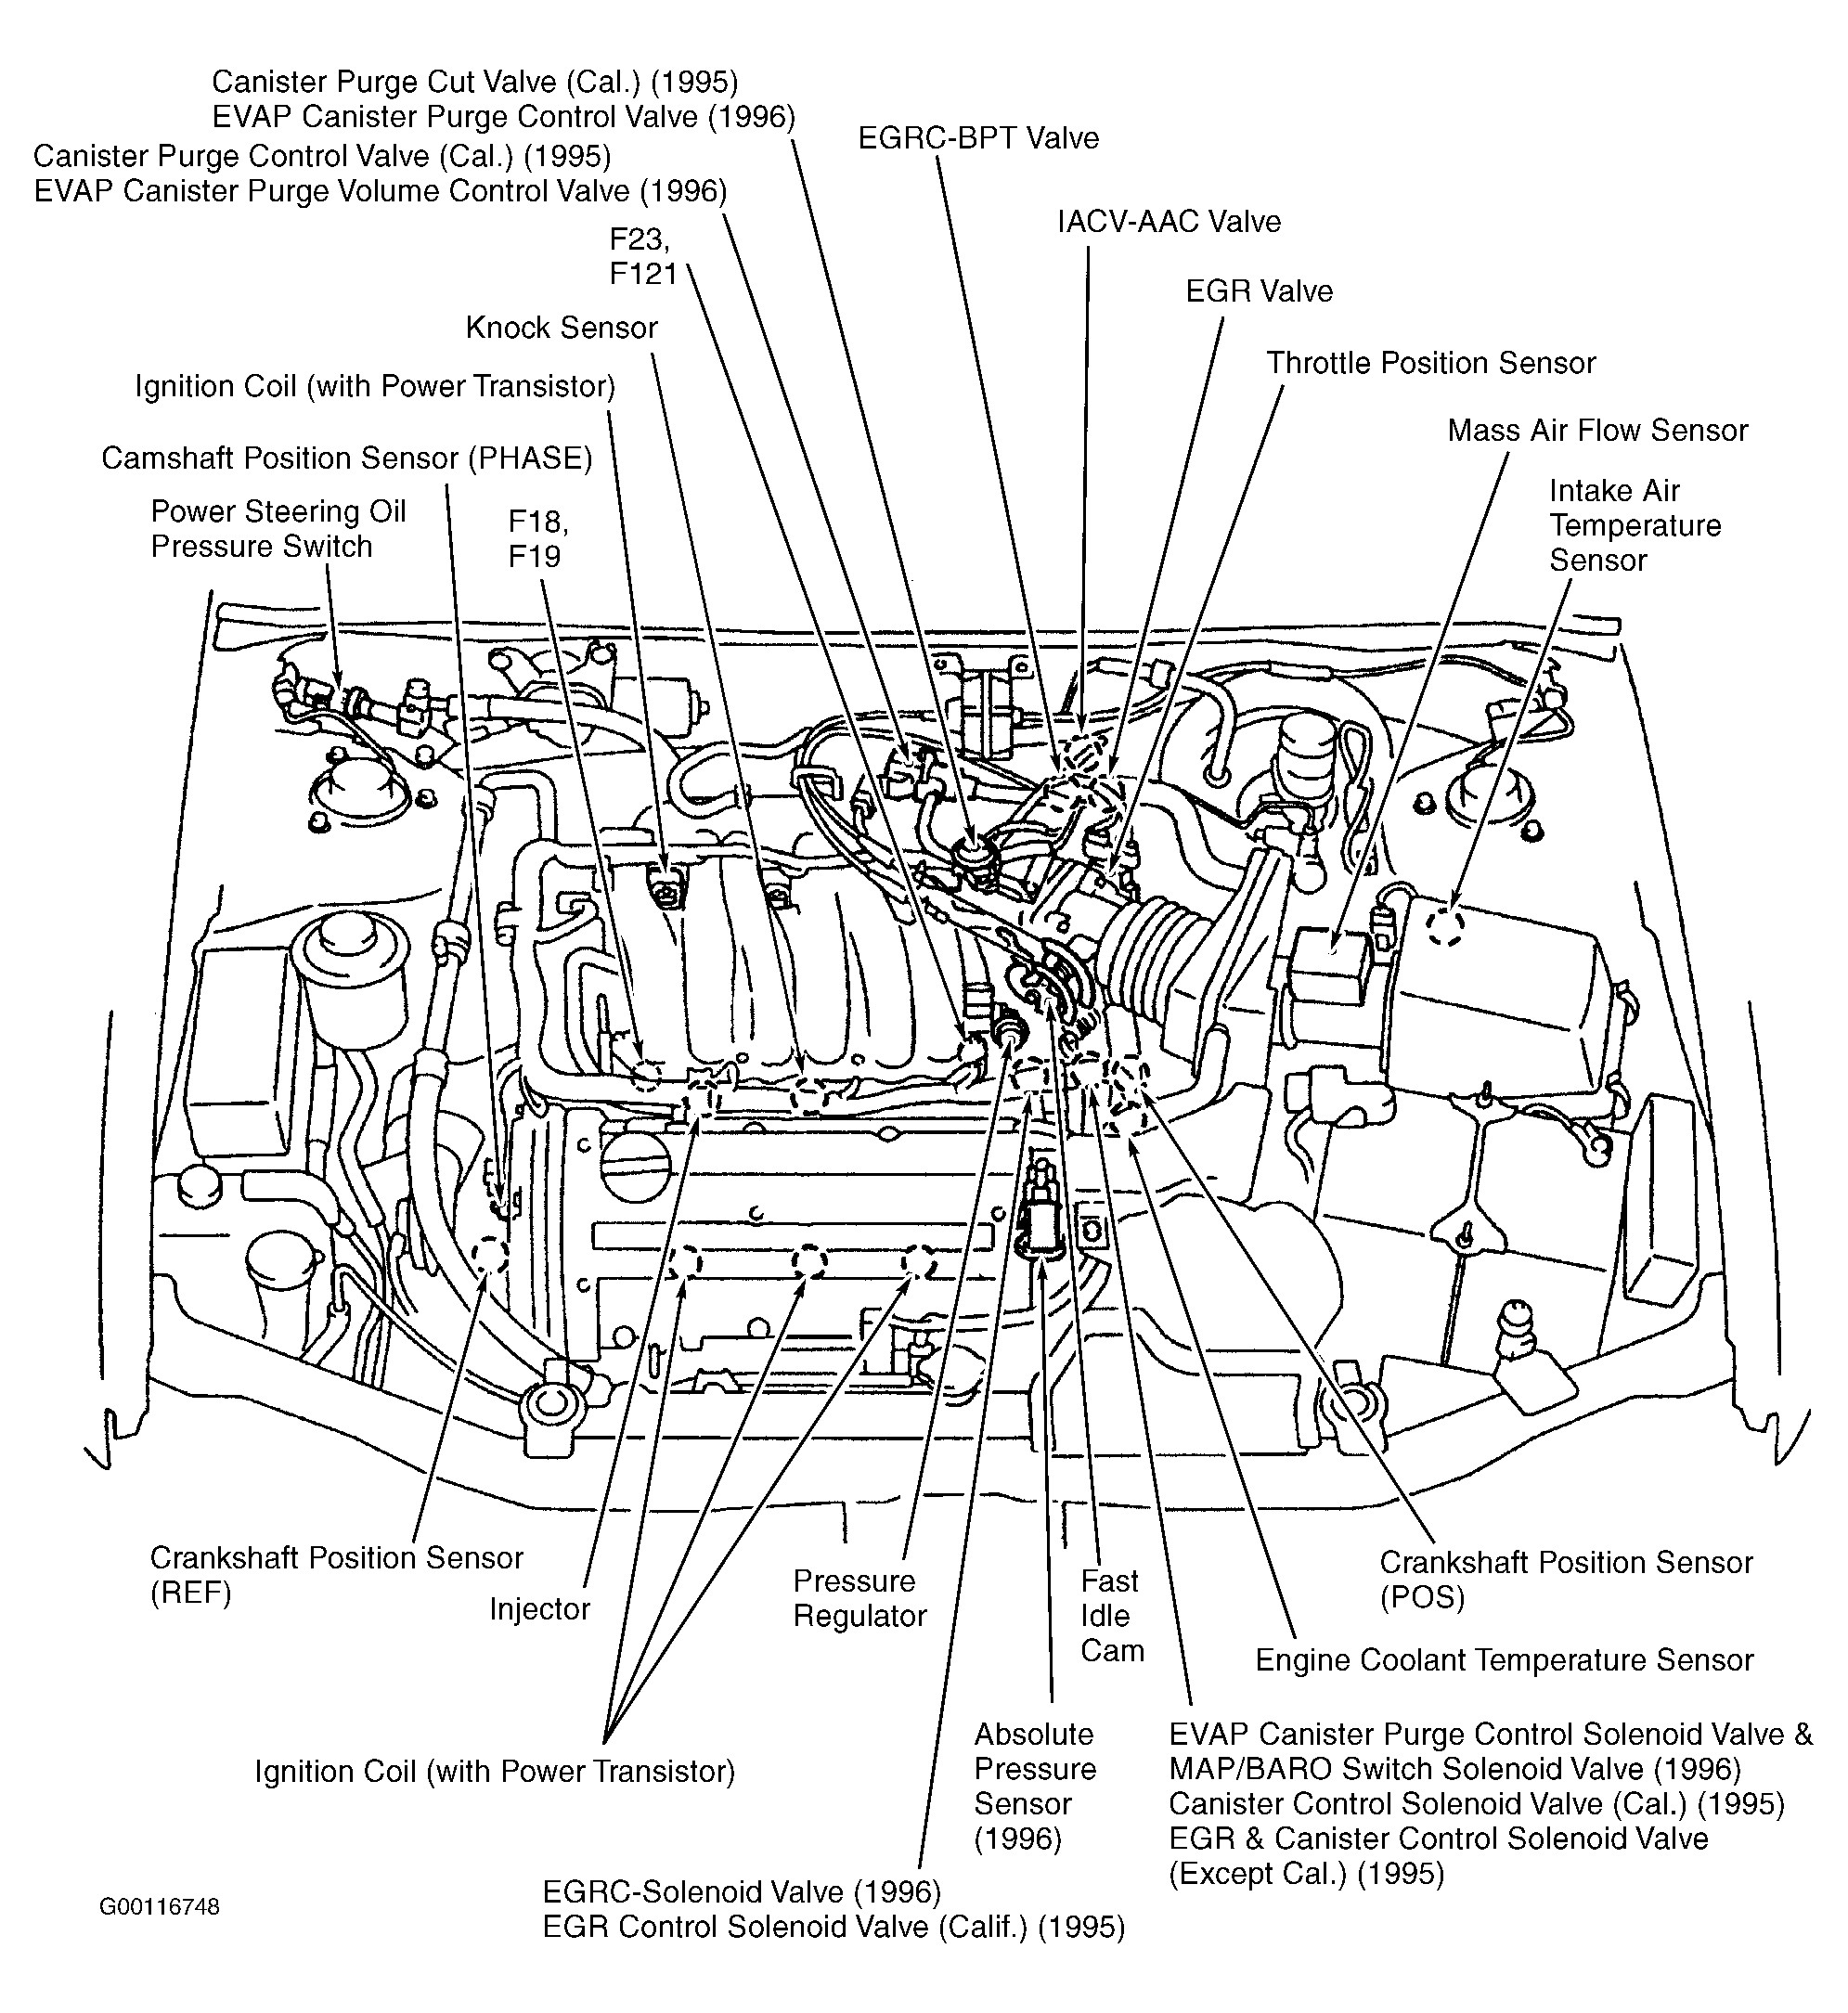 2004 Nissan Quest Engine Diagram 1995nissanmaximaenginediagram Question About California Evap Of 2004 Nissan Quest Engine Diagram